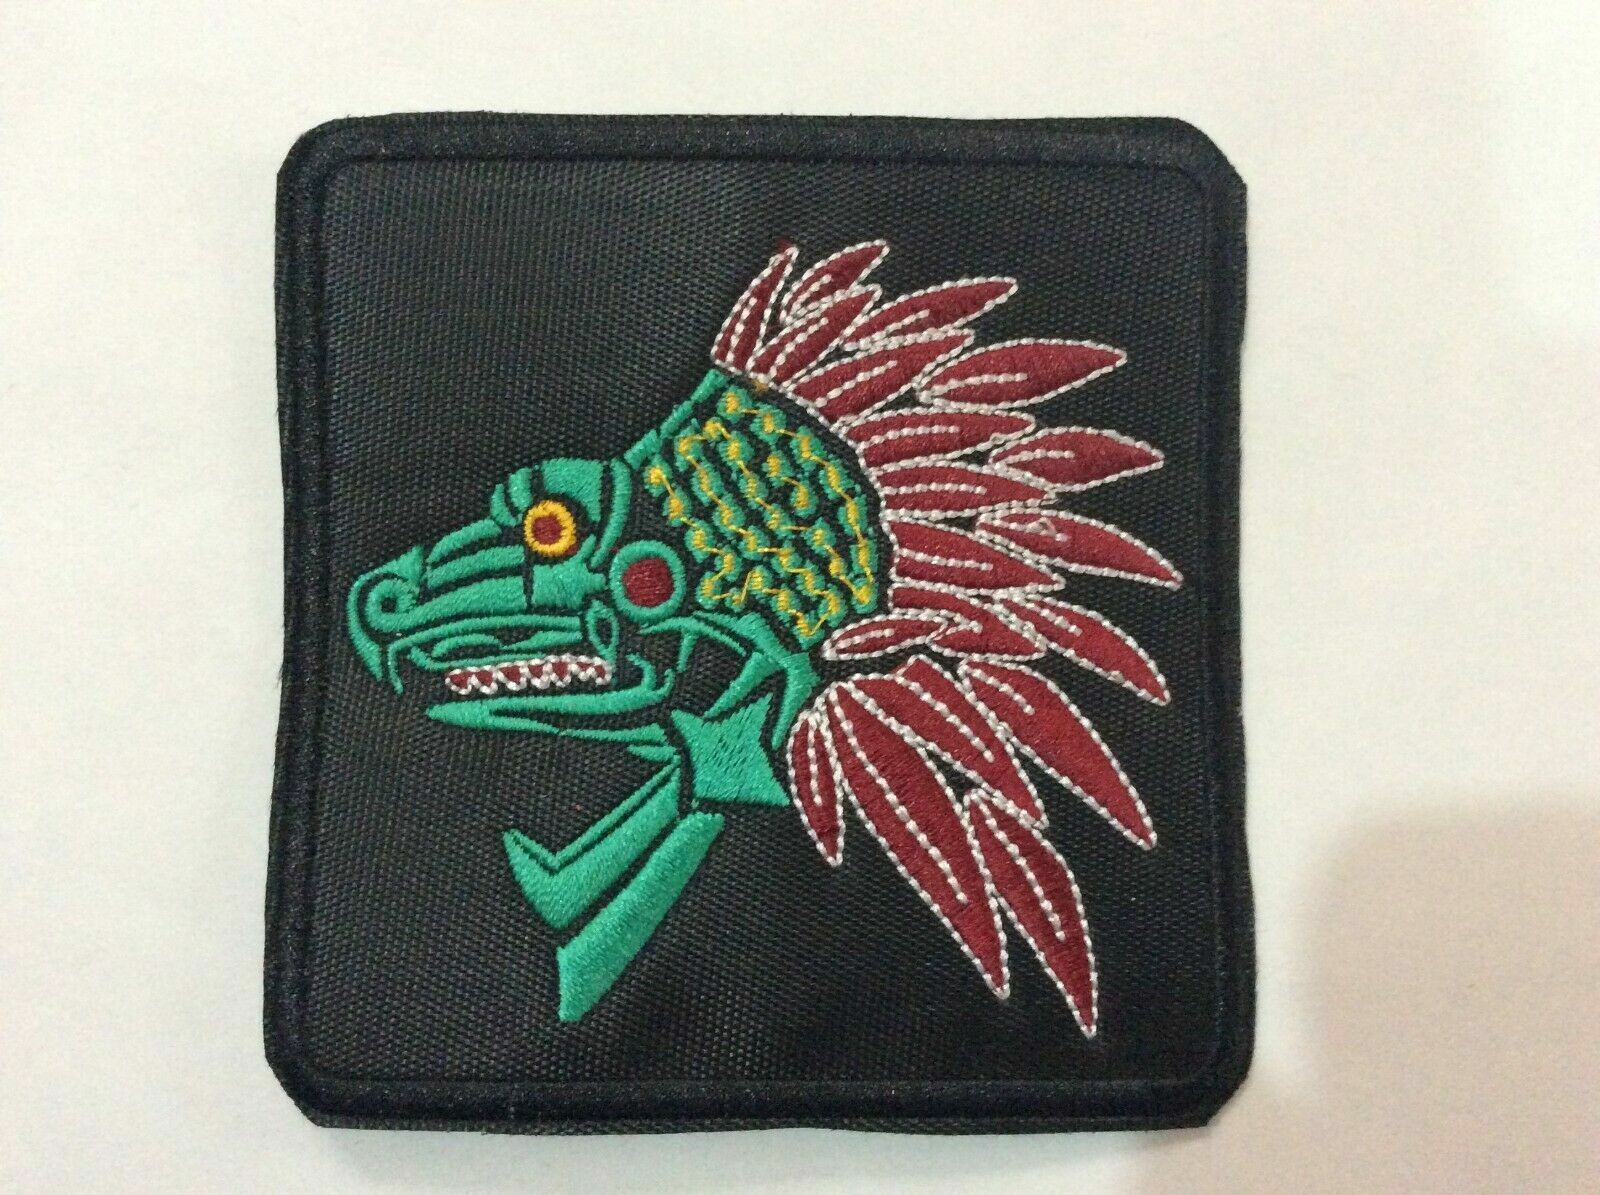 Patch Quetzalcoatl - Aztec Mitology - Mexico - Kukulkan - Feathered Serpent Maya